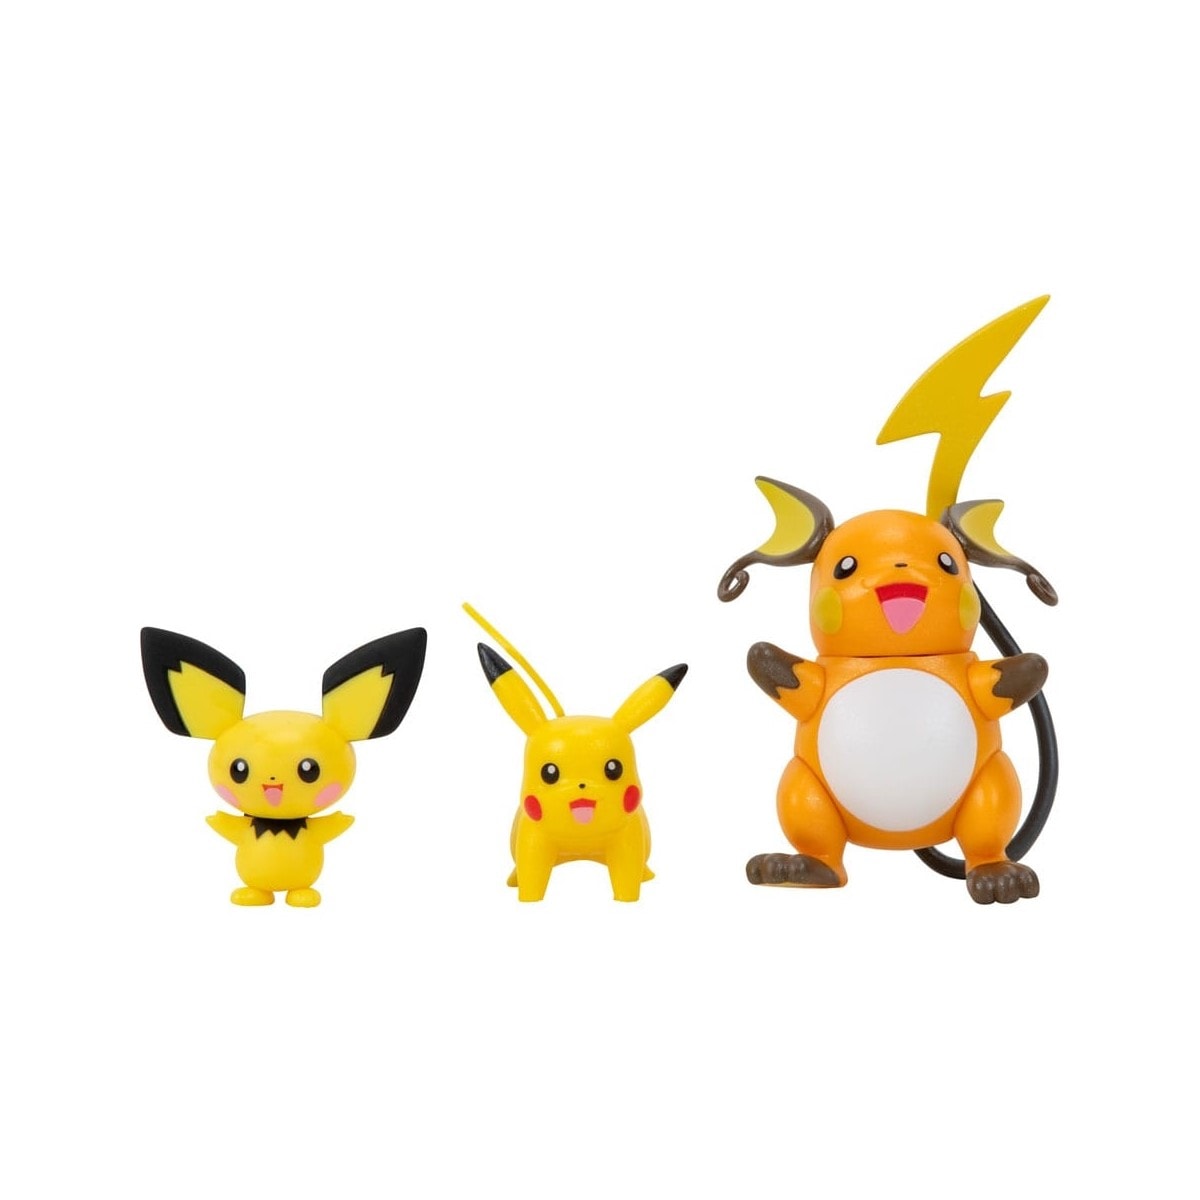 Coussin Pokemon | Oreiller Pikachu | Acheter coussin Pikachu pas cher